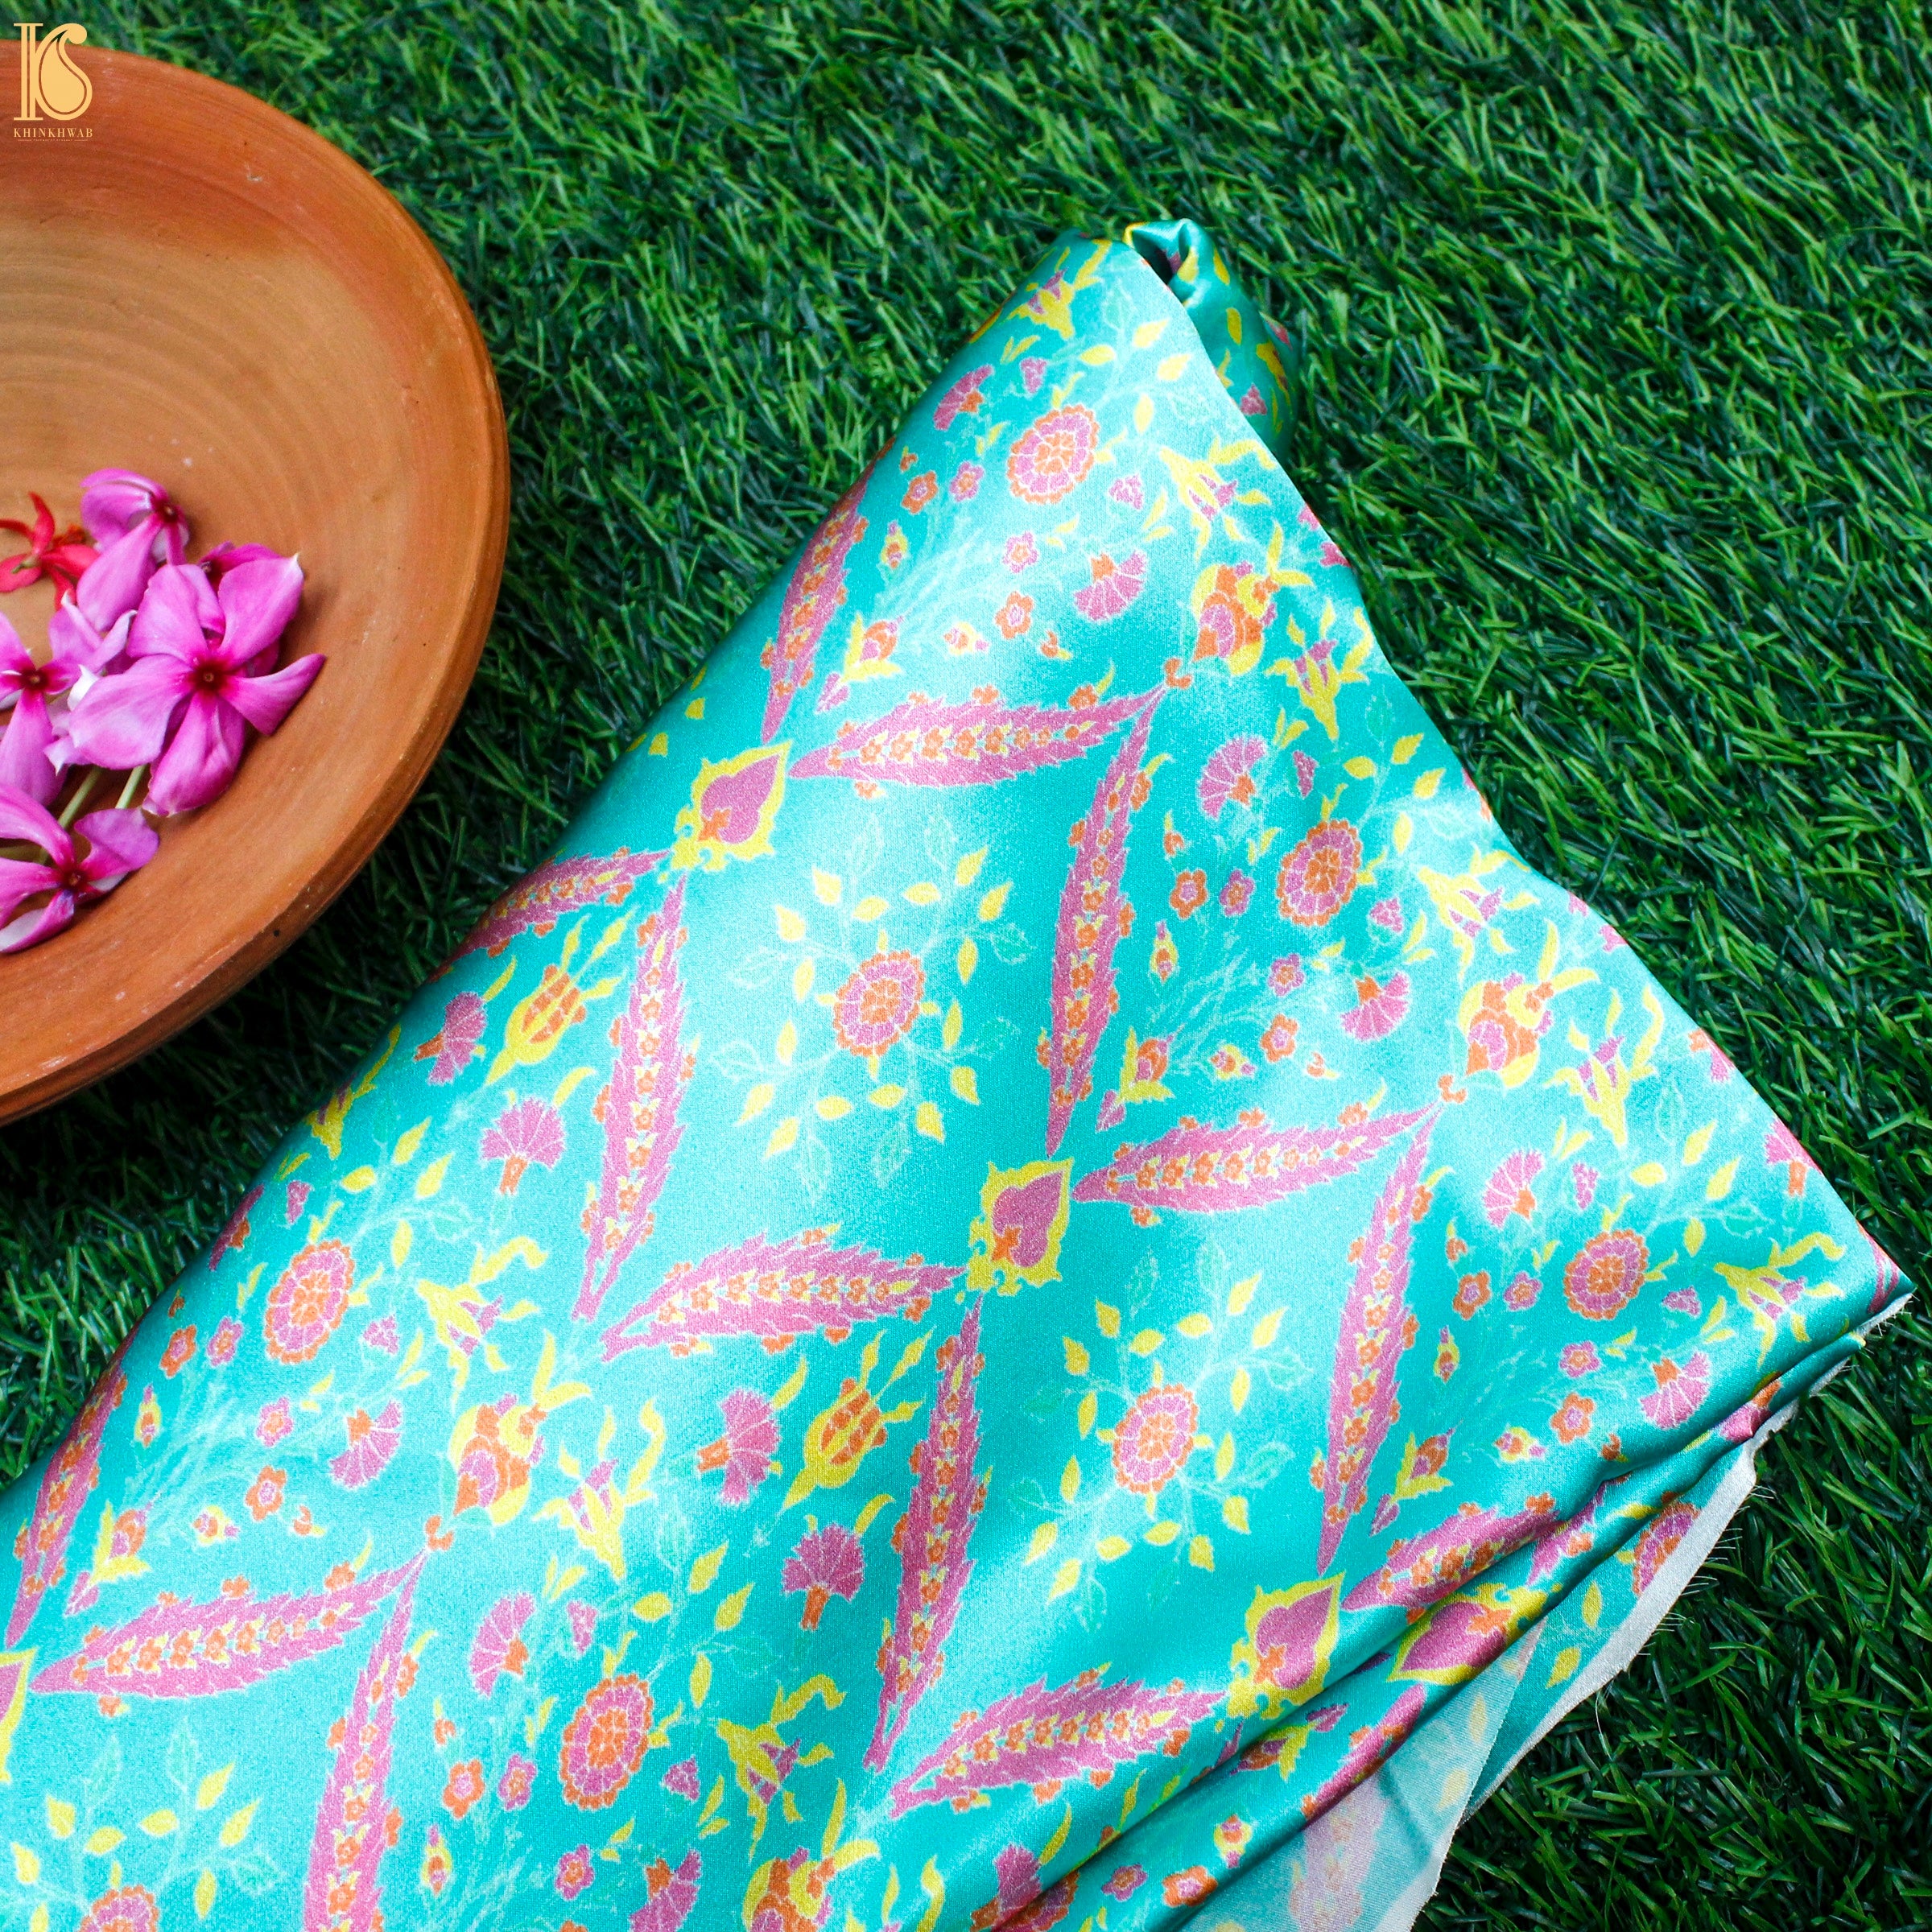 NERGİS - Turquoise Pure Sateen Silk Print Fabric - Khinkhwab